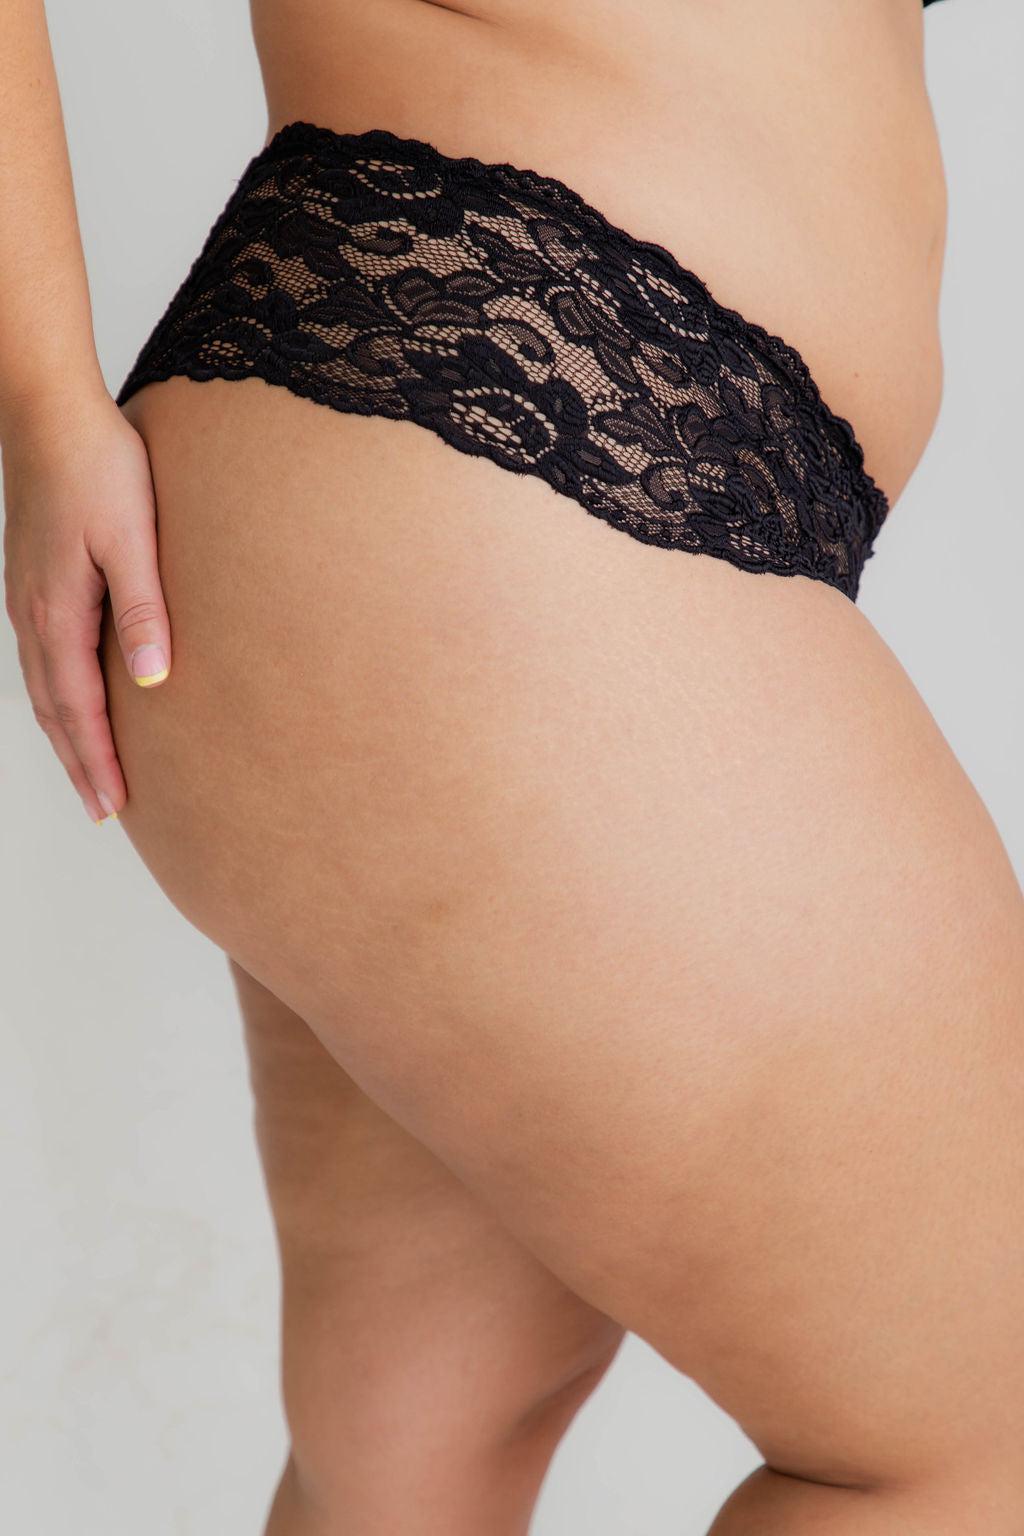 Kourtney Black Lace Briefs - $16.00 - Underwear - Naked Curve